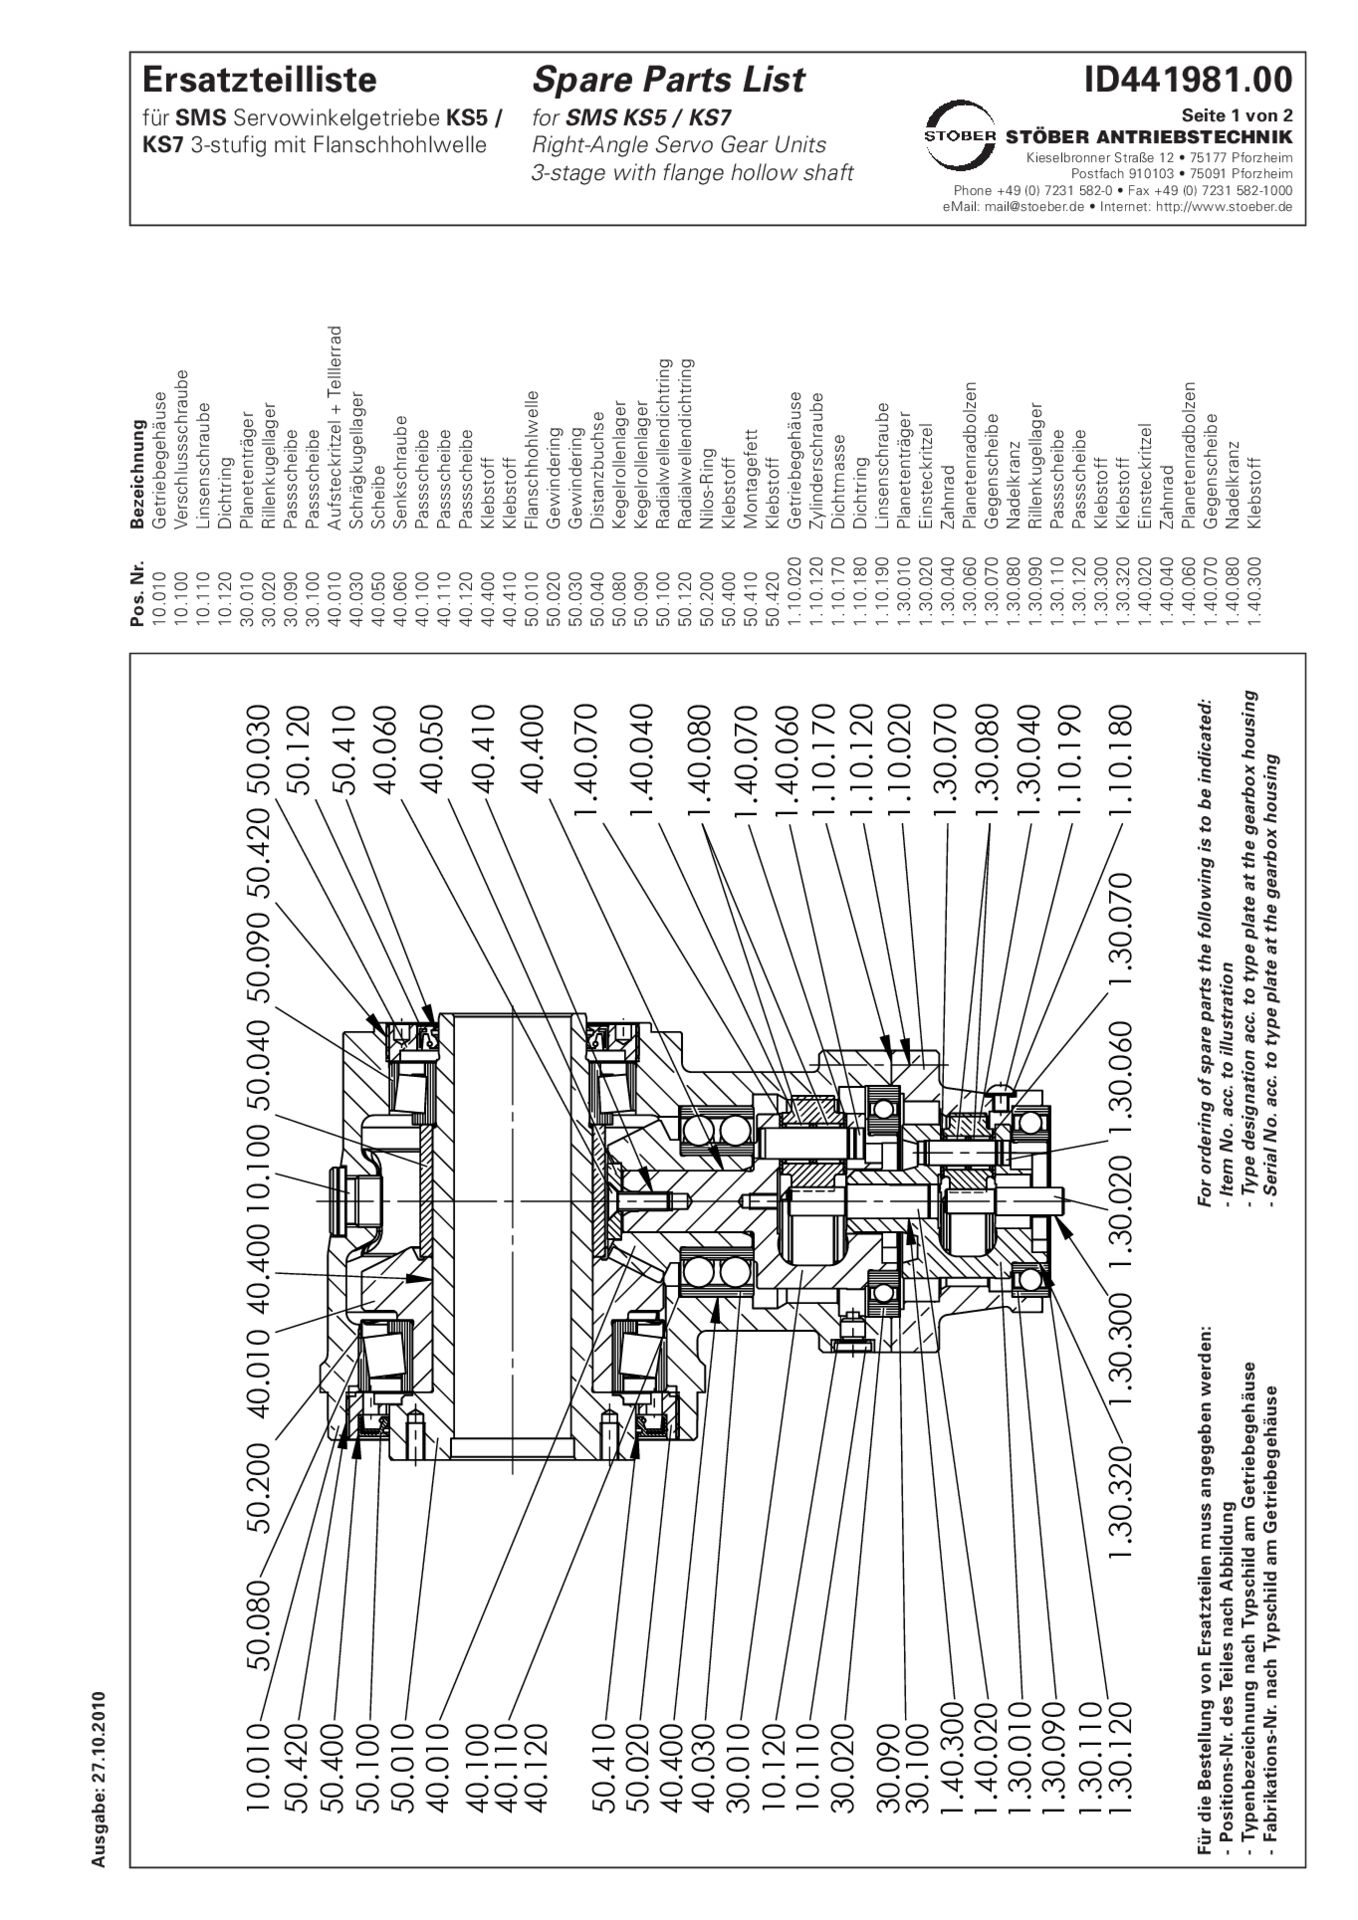 Replacement parts list helical bevel gear units KS503 KS703 3-stage with flange hollow shaft for SMS gear unitsErsatzteilliste Kegelradgetriebe KS503 KS703 3-stufig mit Flanschhohlwelle für SMS-Getriebe